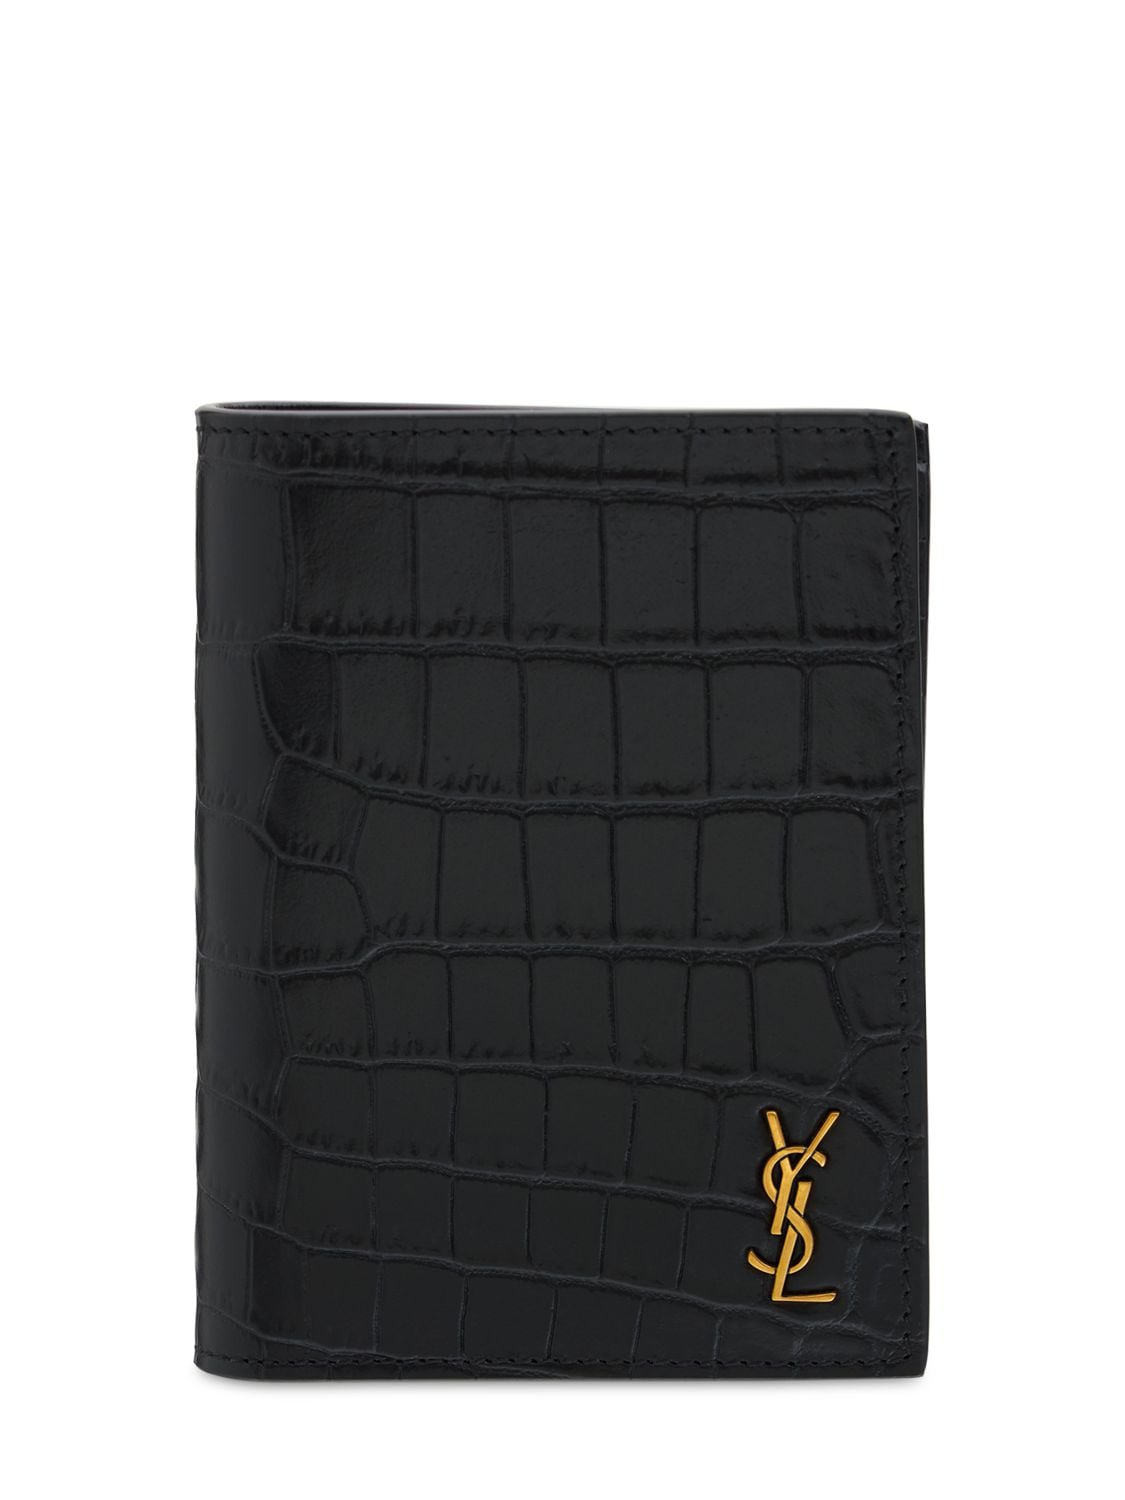 Saint Laurent Ysl Leather Wallet In Black